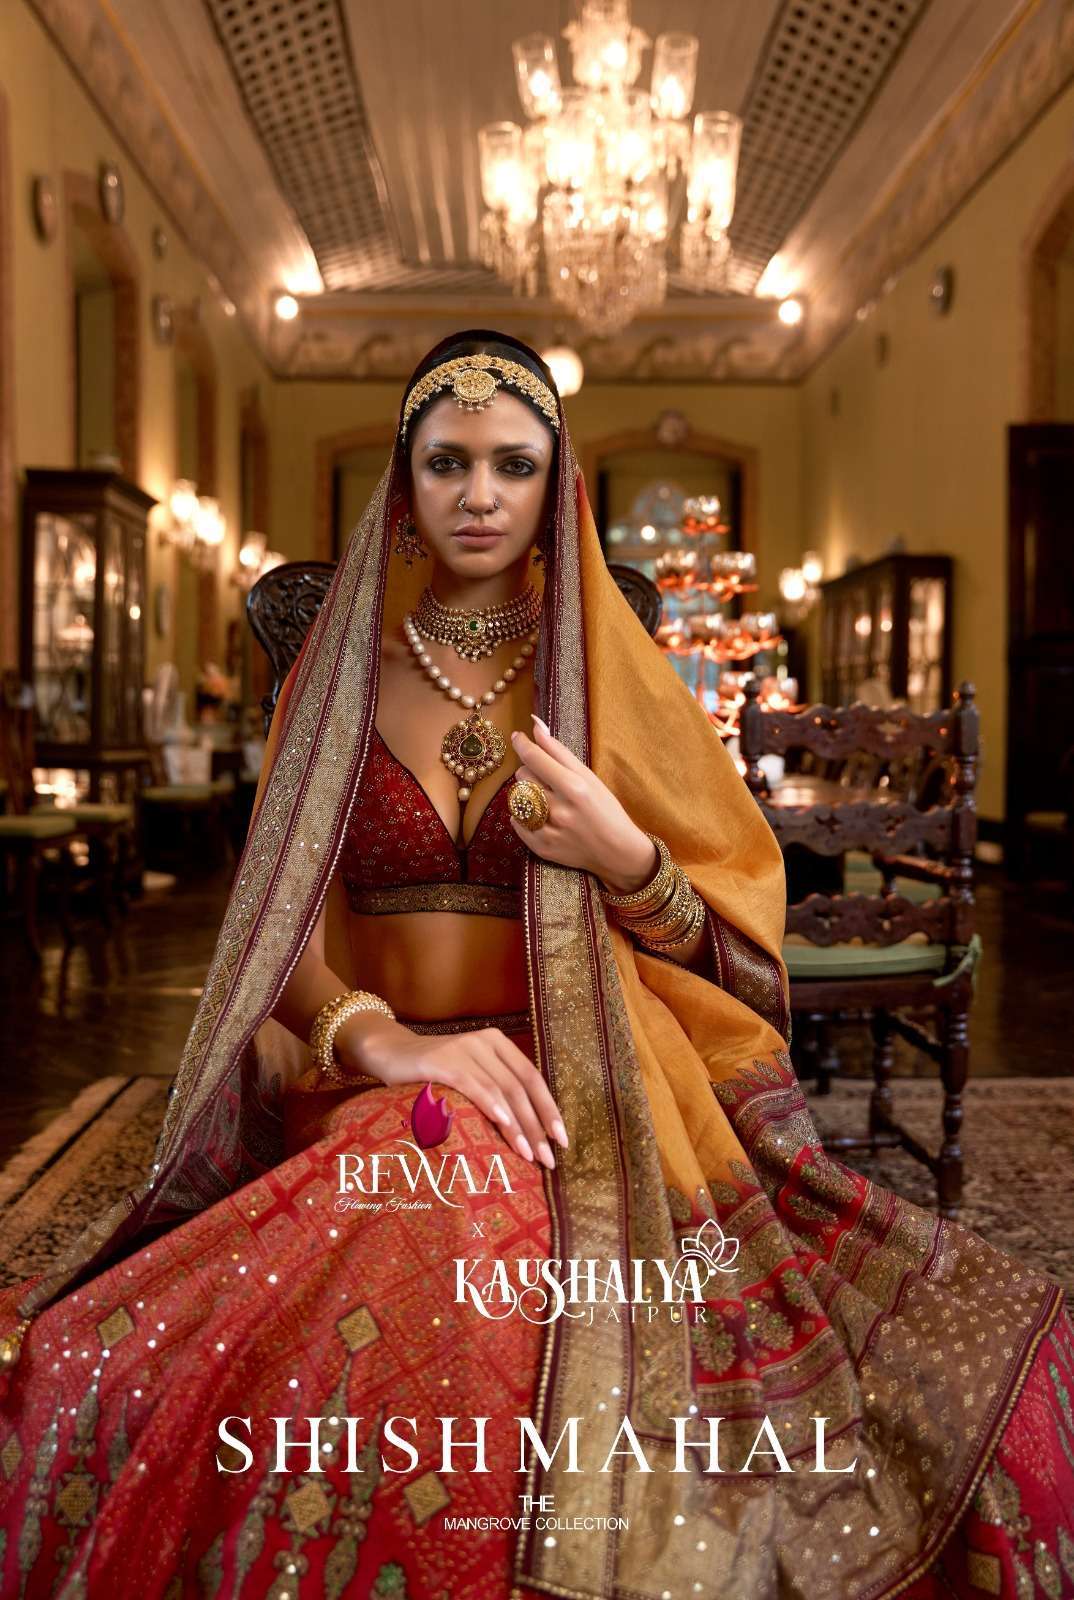 Rewaa Fashion Shishmahal Silk with Readymade Heavy Royal Loo...